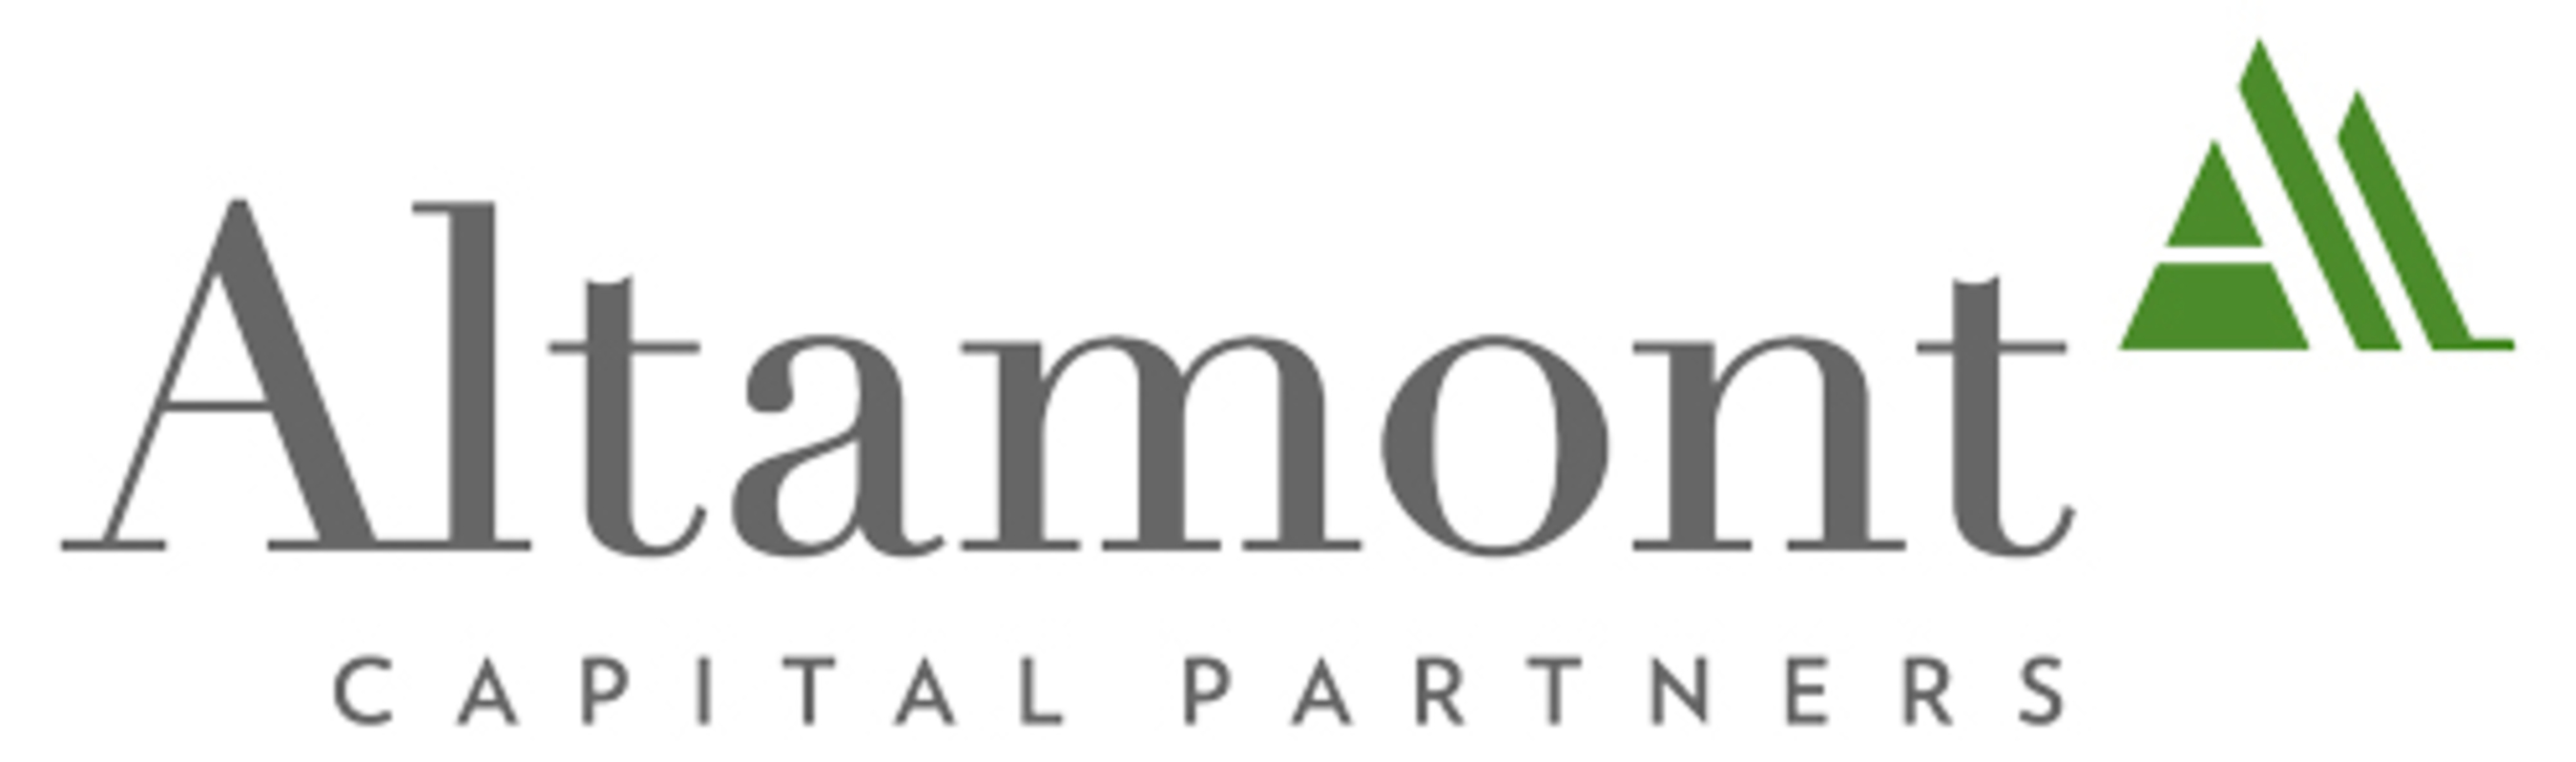 Altamont Capital Partners logo.